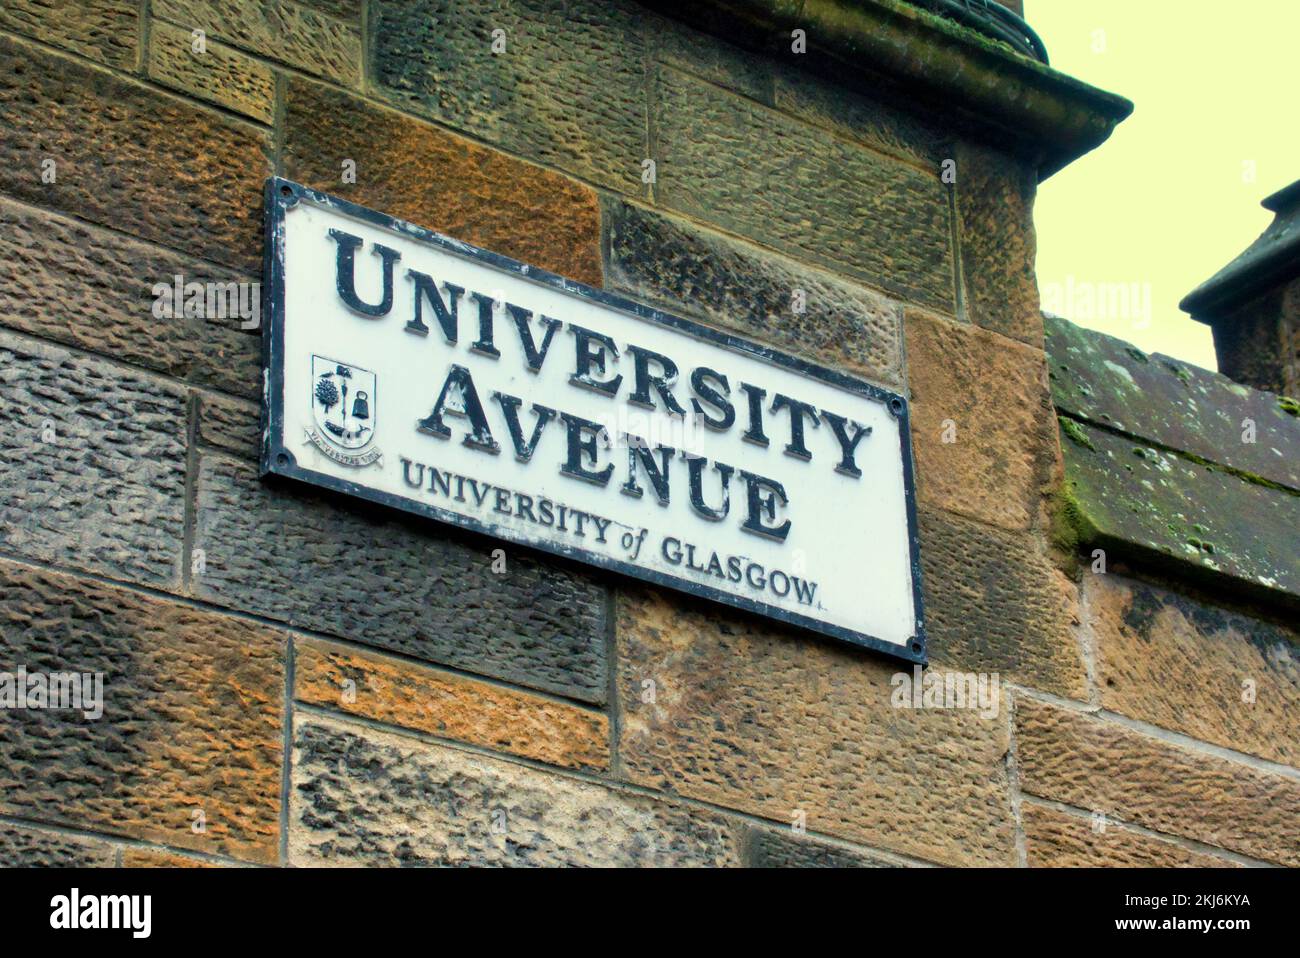 Glasgow university sign for university avenue Stock Photo